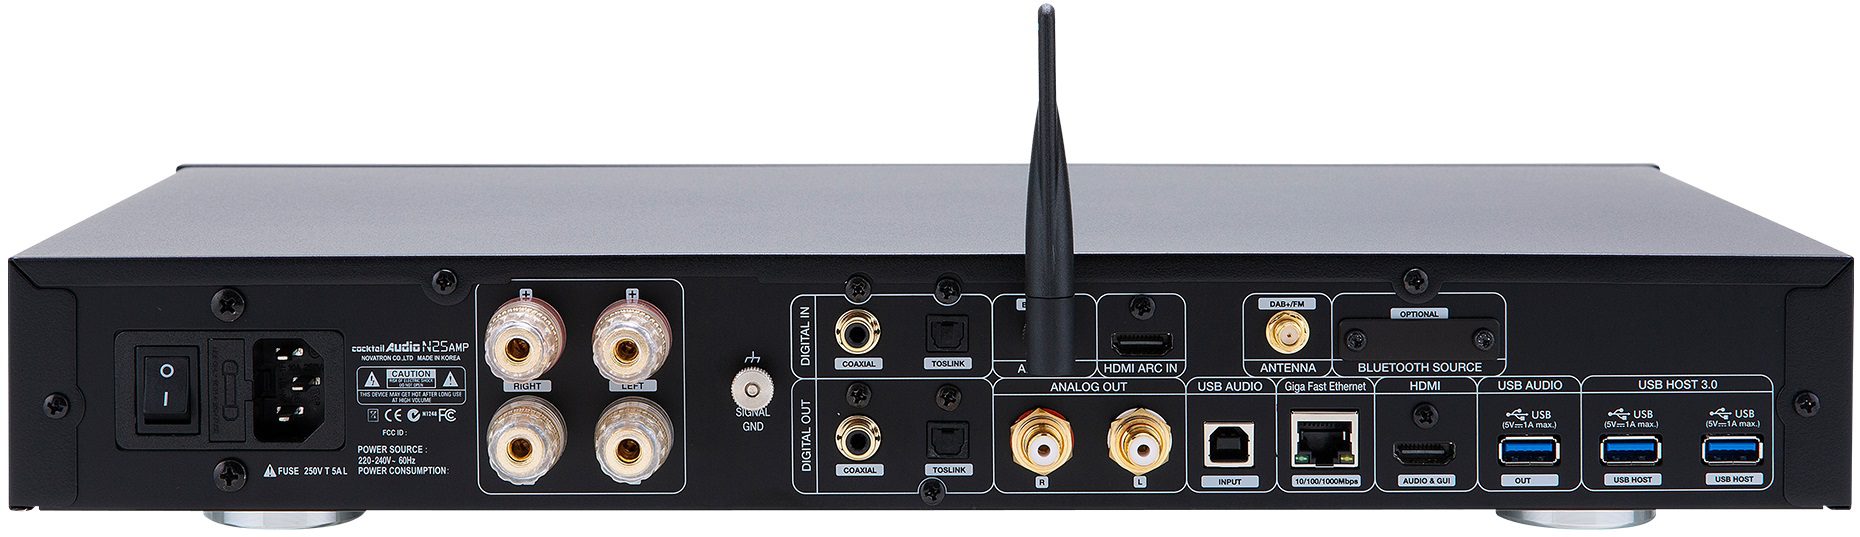 CocktailAudio N25AMP zwart - achterkant - Stereo receiver